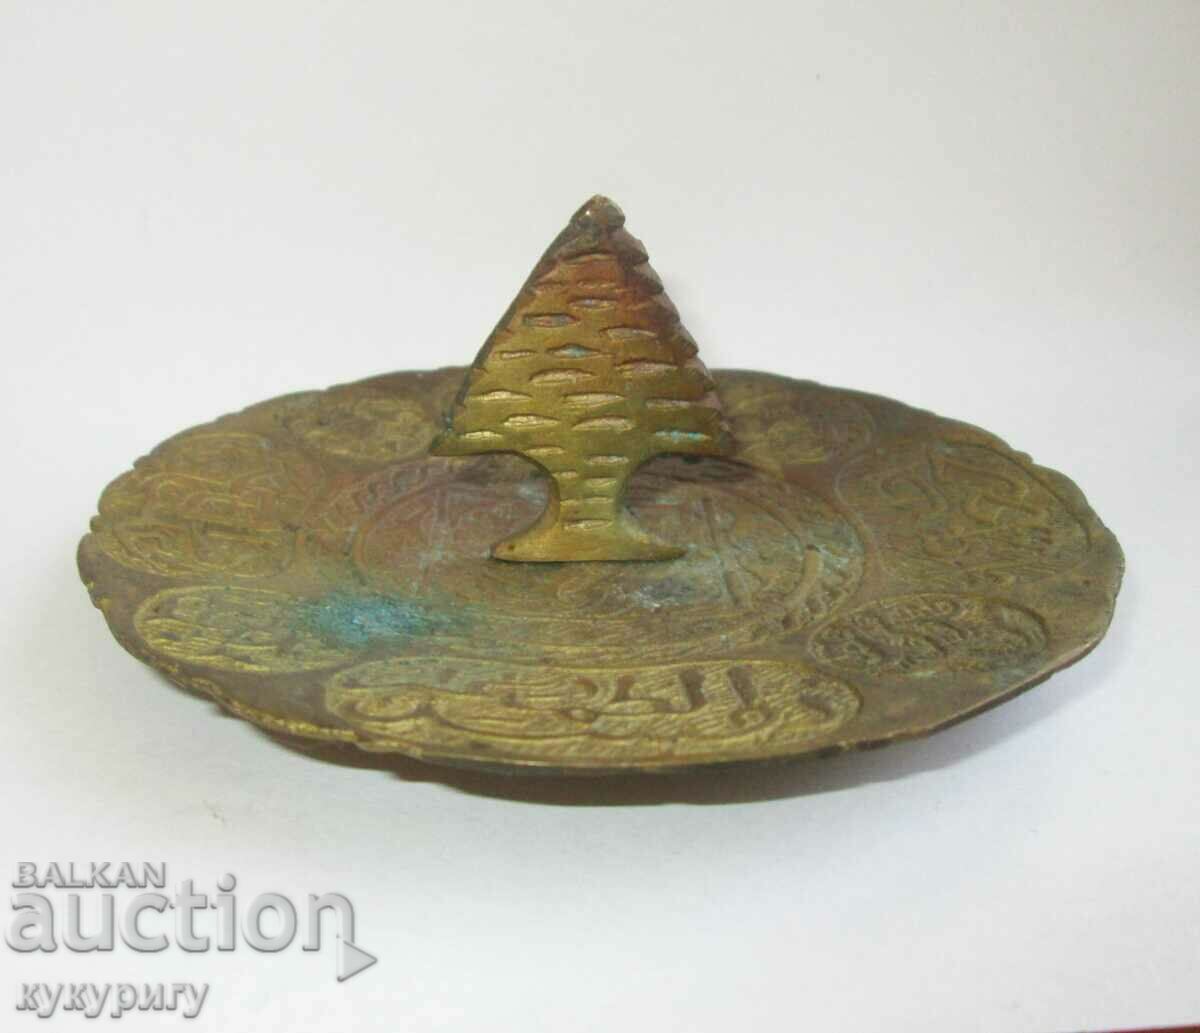 Obiect farfurie din farfurie veche din bronz cu inscripții arabe